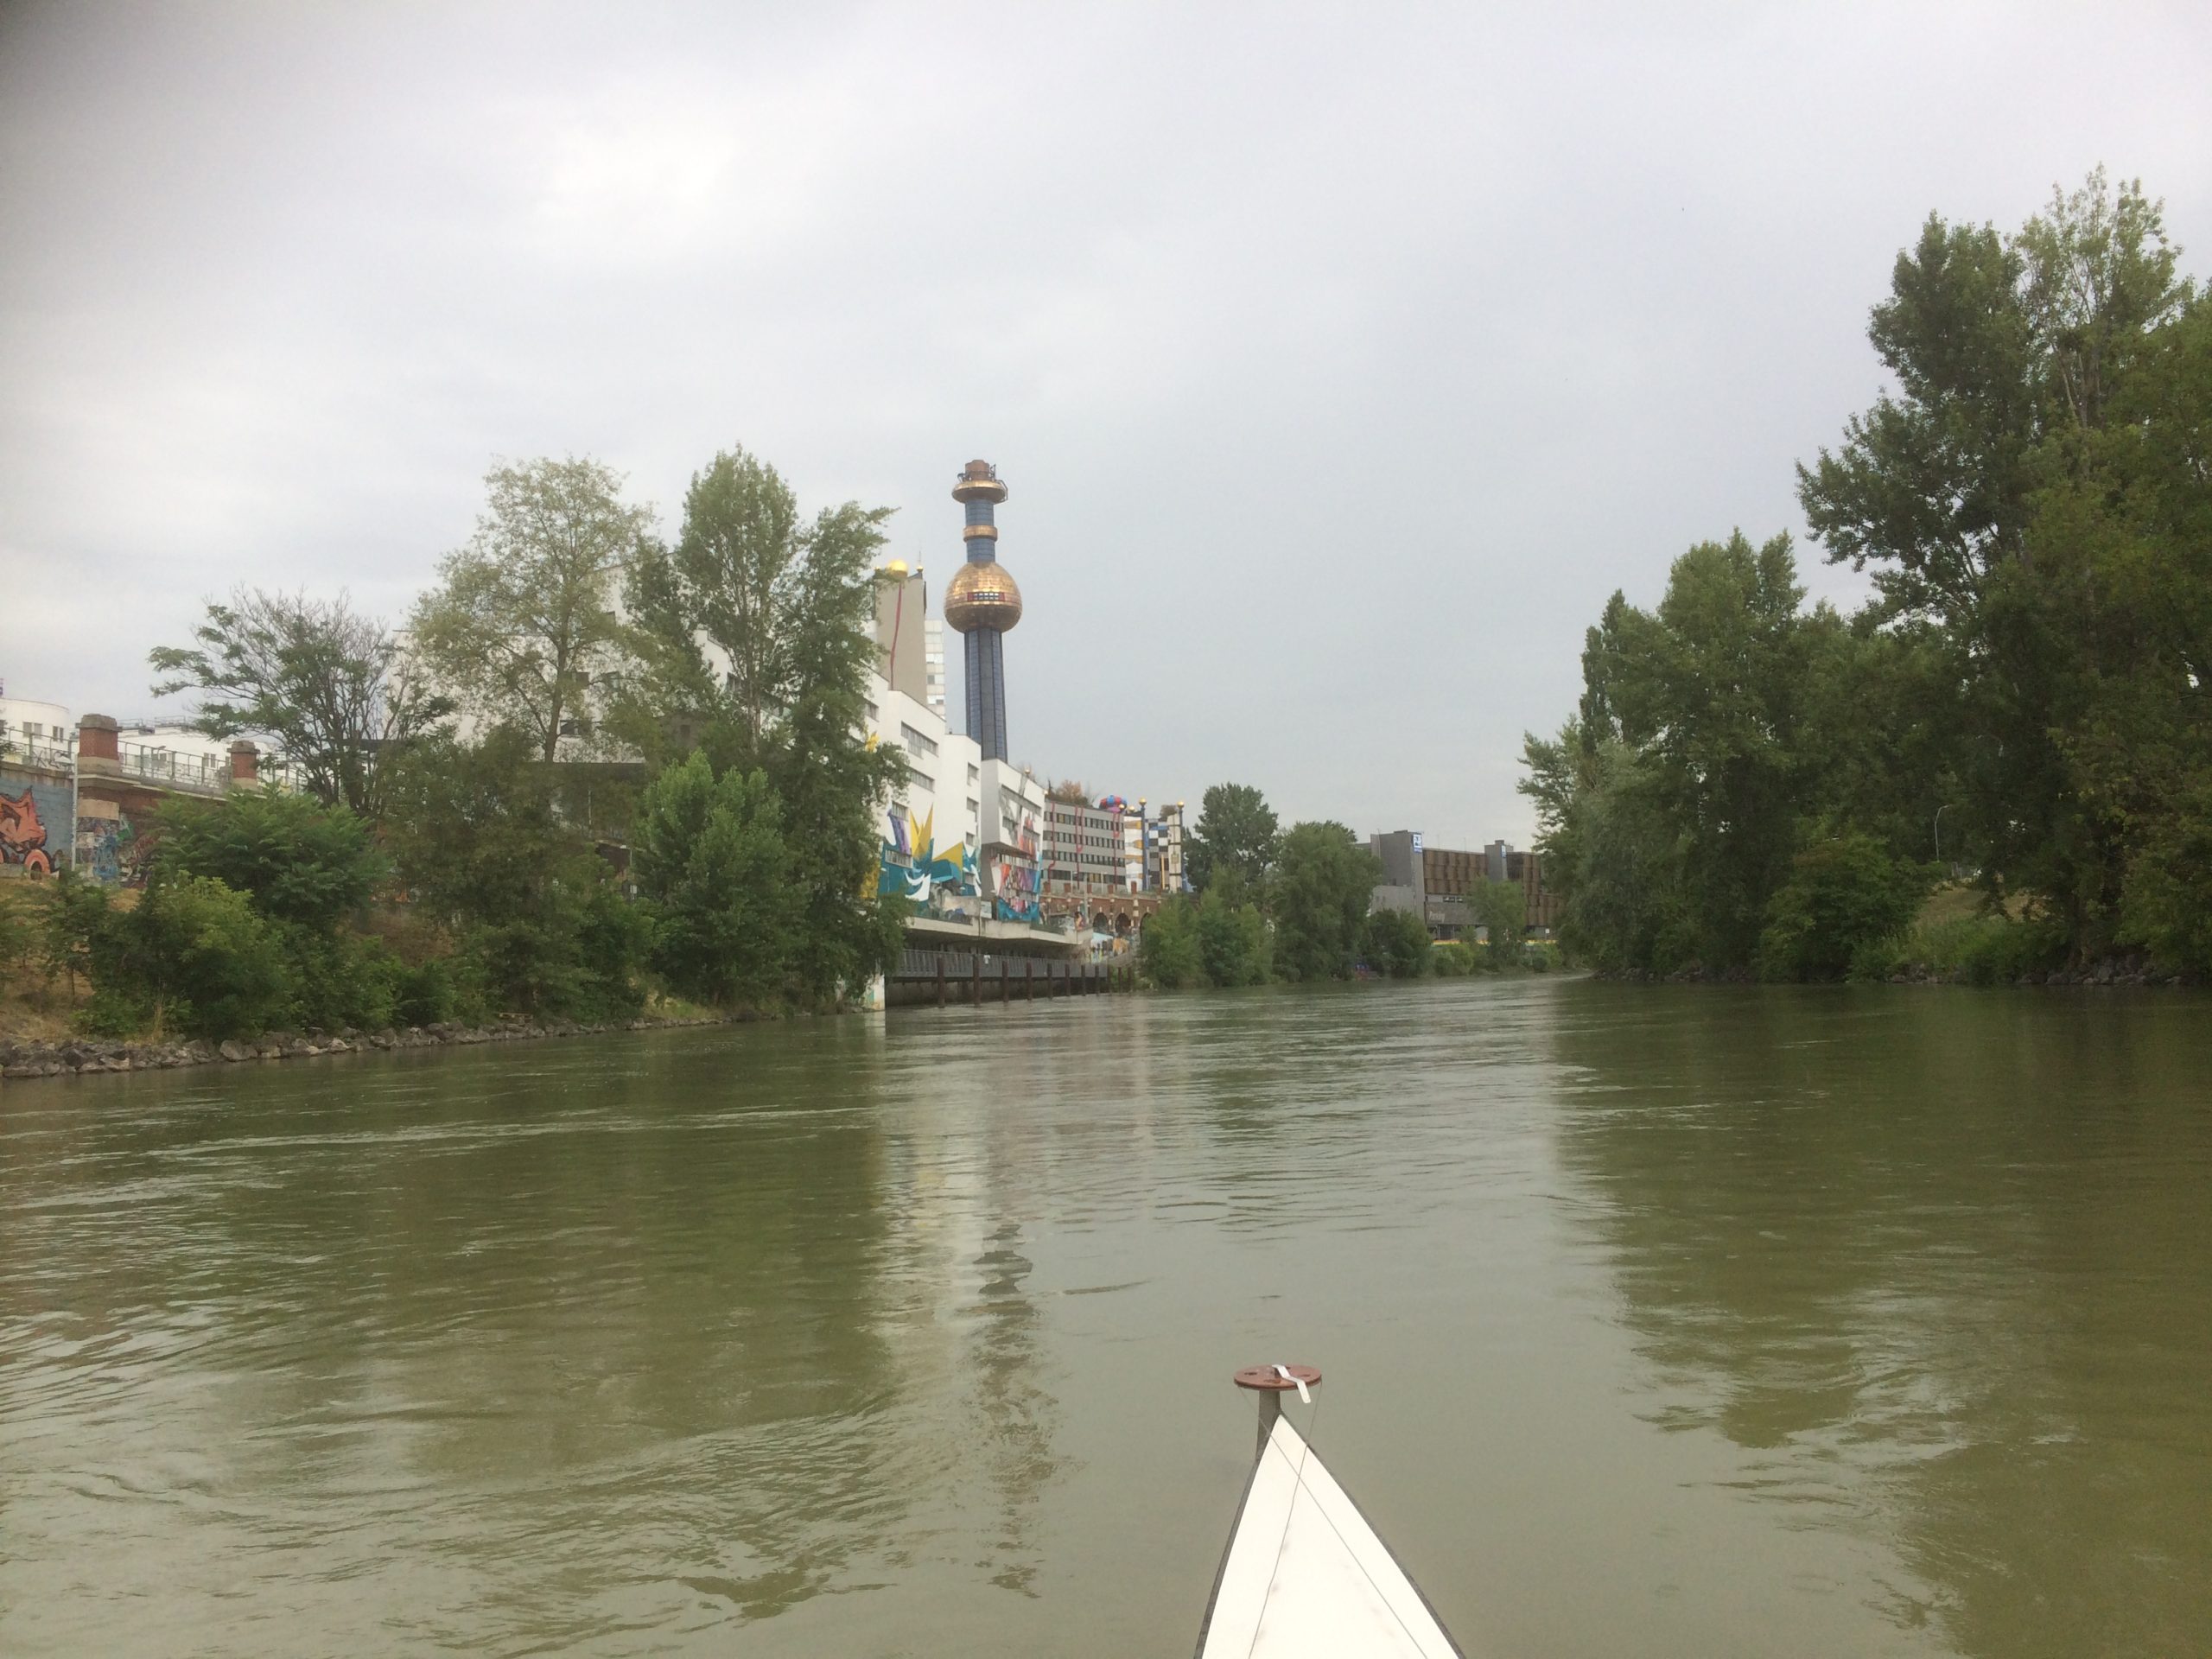 Donaukanal vom Ruderboot aus